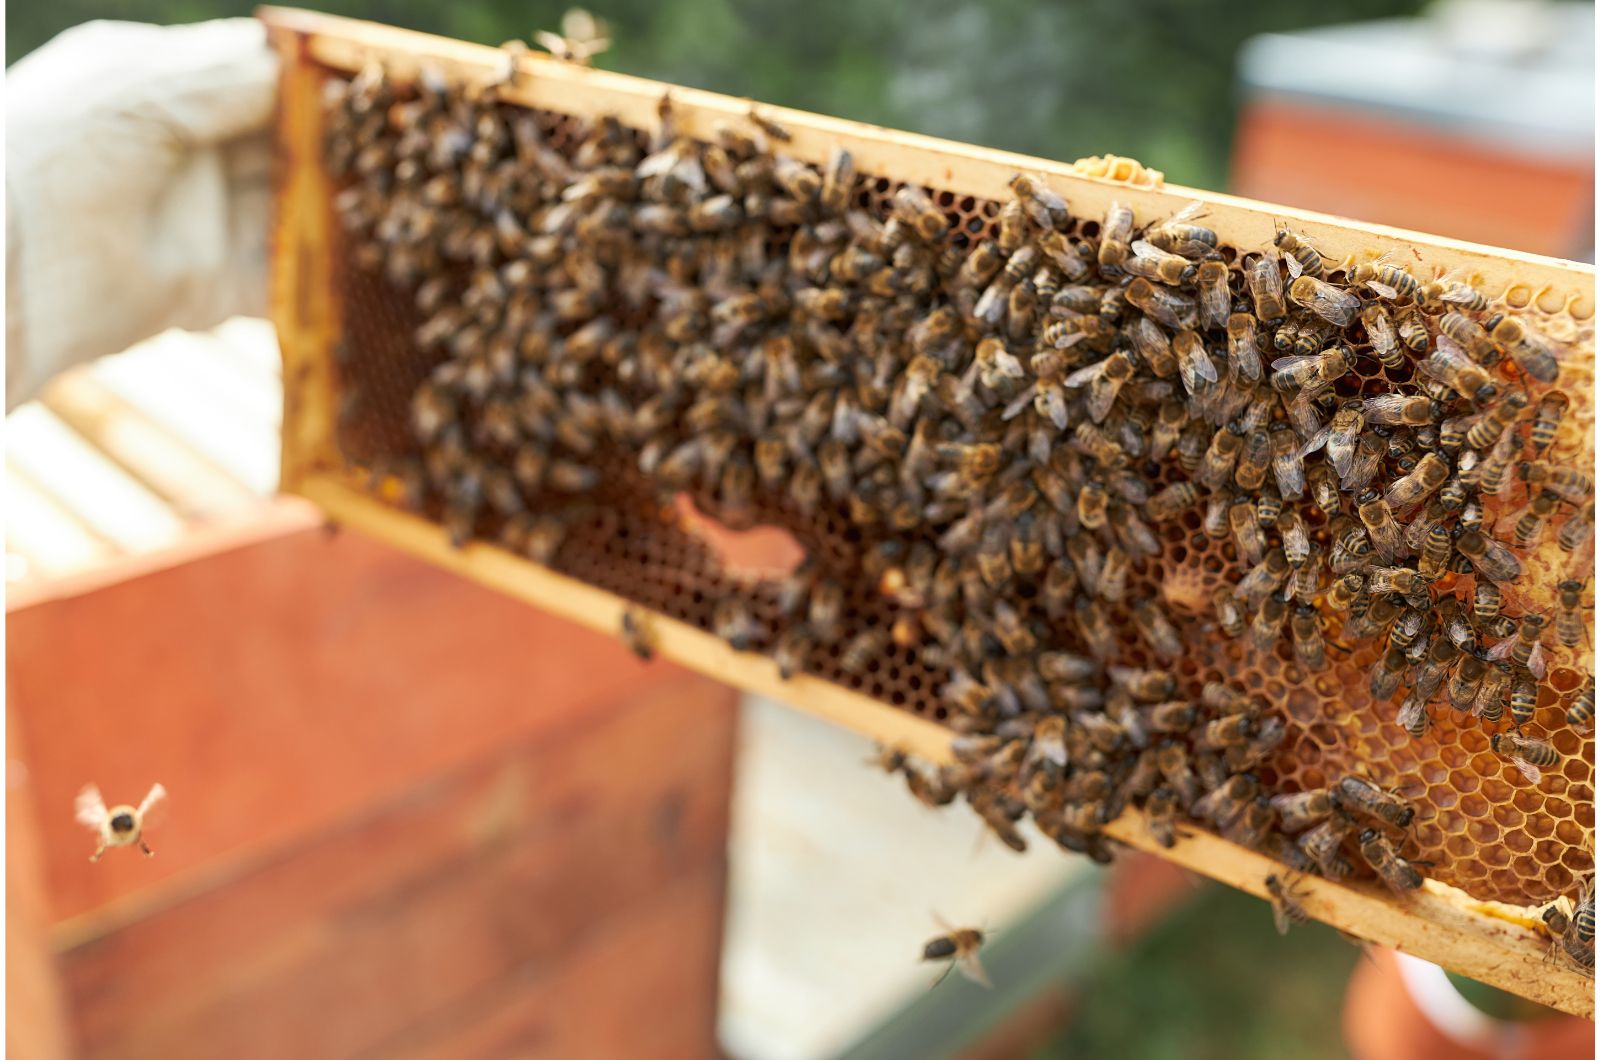 beekeeper holding part of beehive